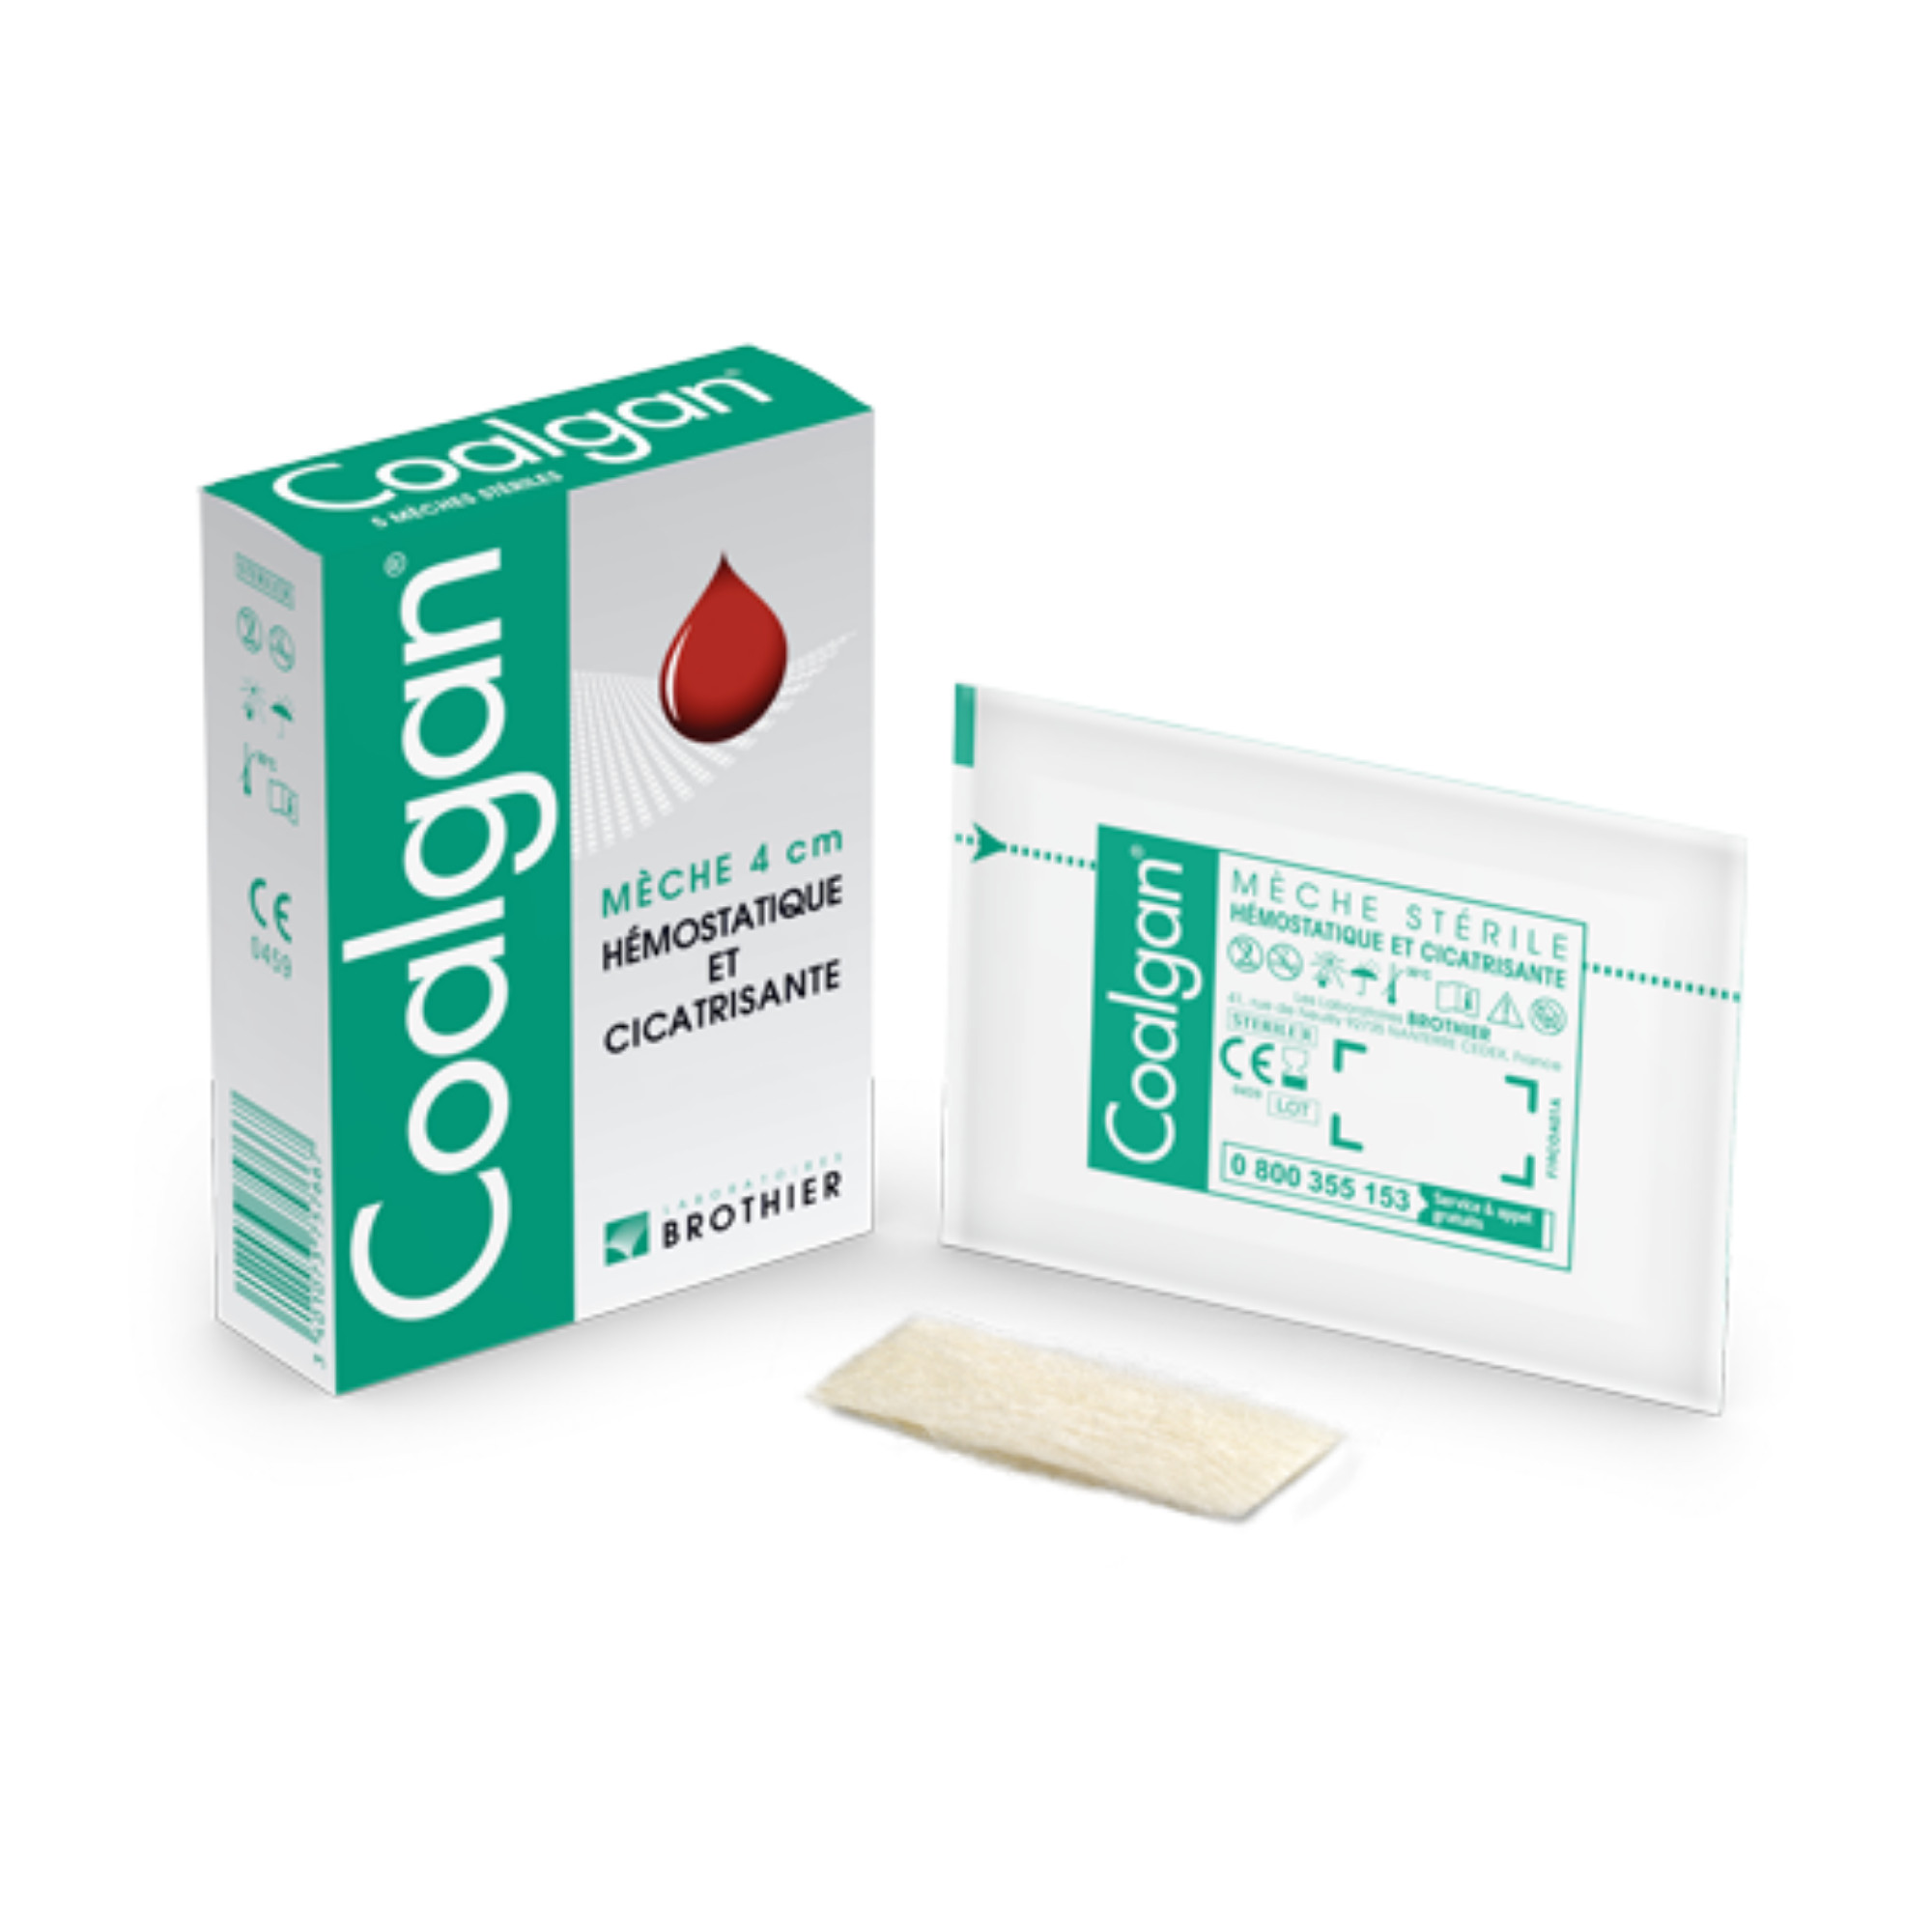 Coalgan Stops Bleeding 5 Sterile Wicks by Laboratoires Brothier